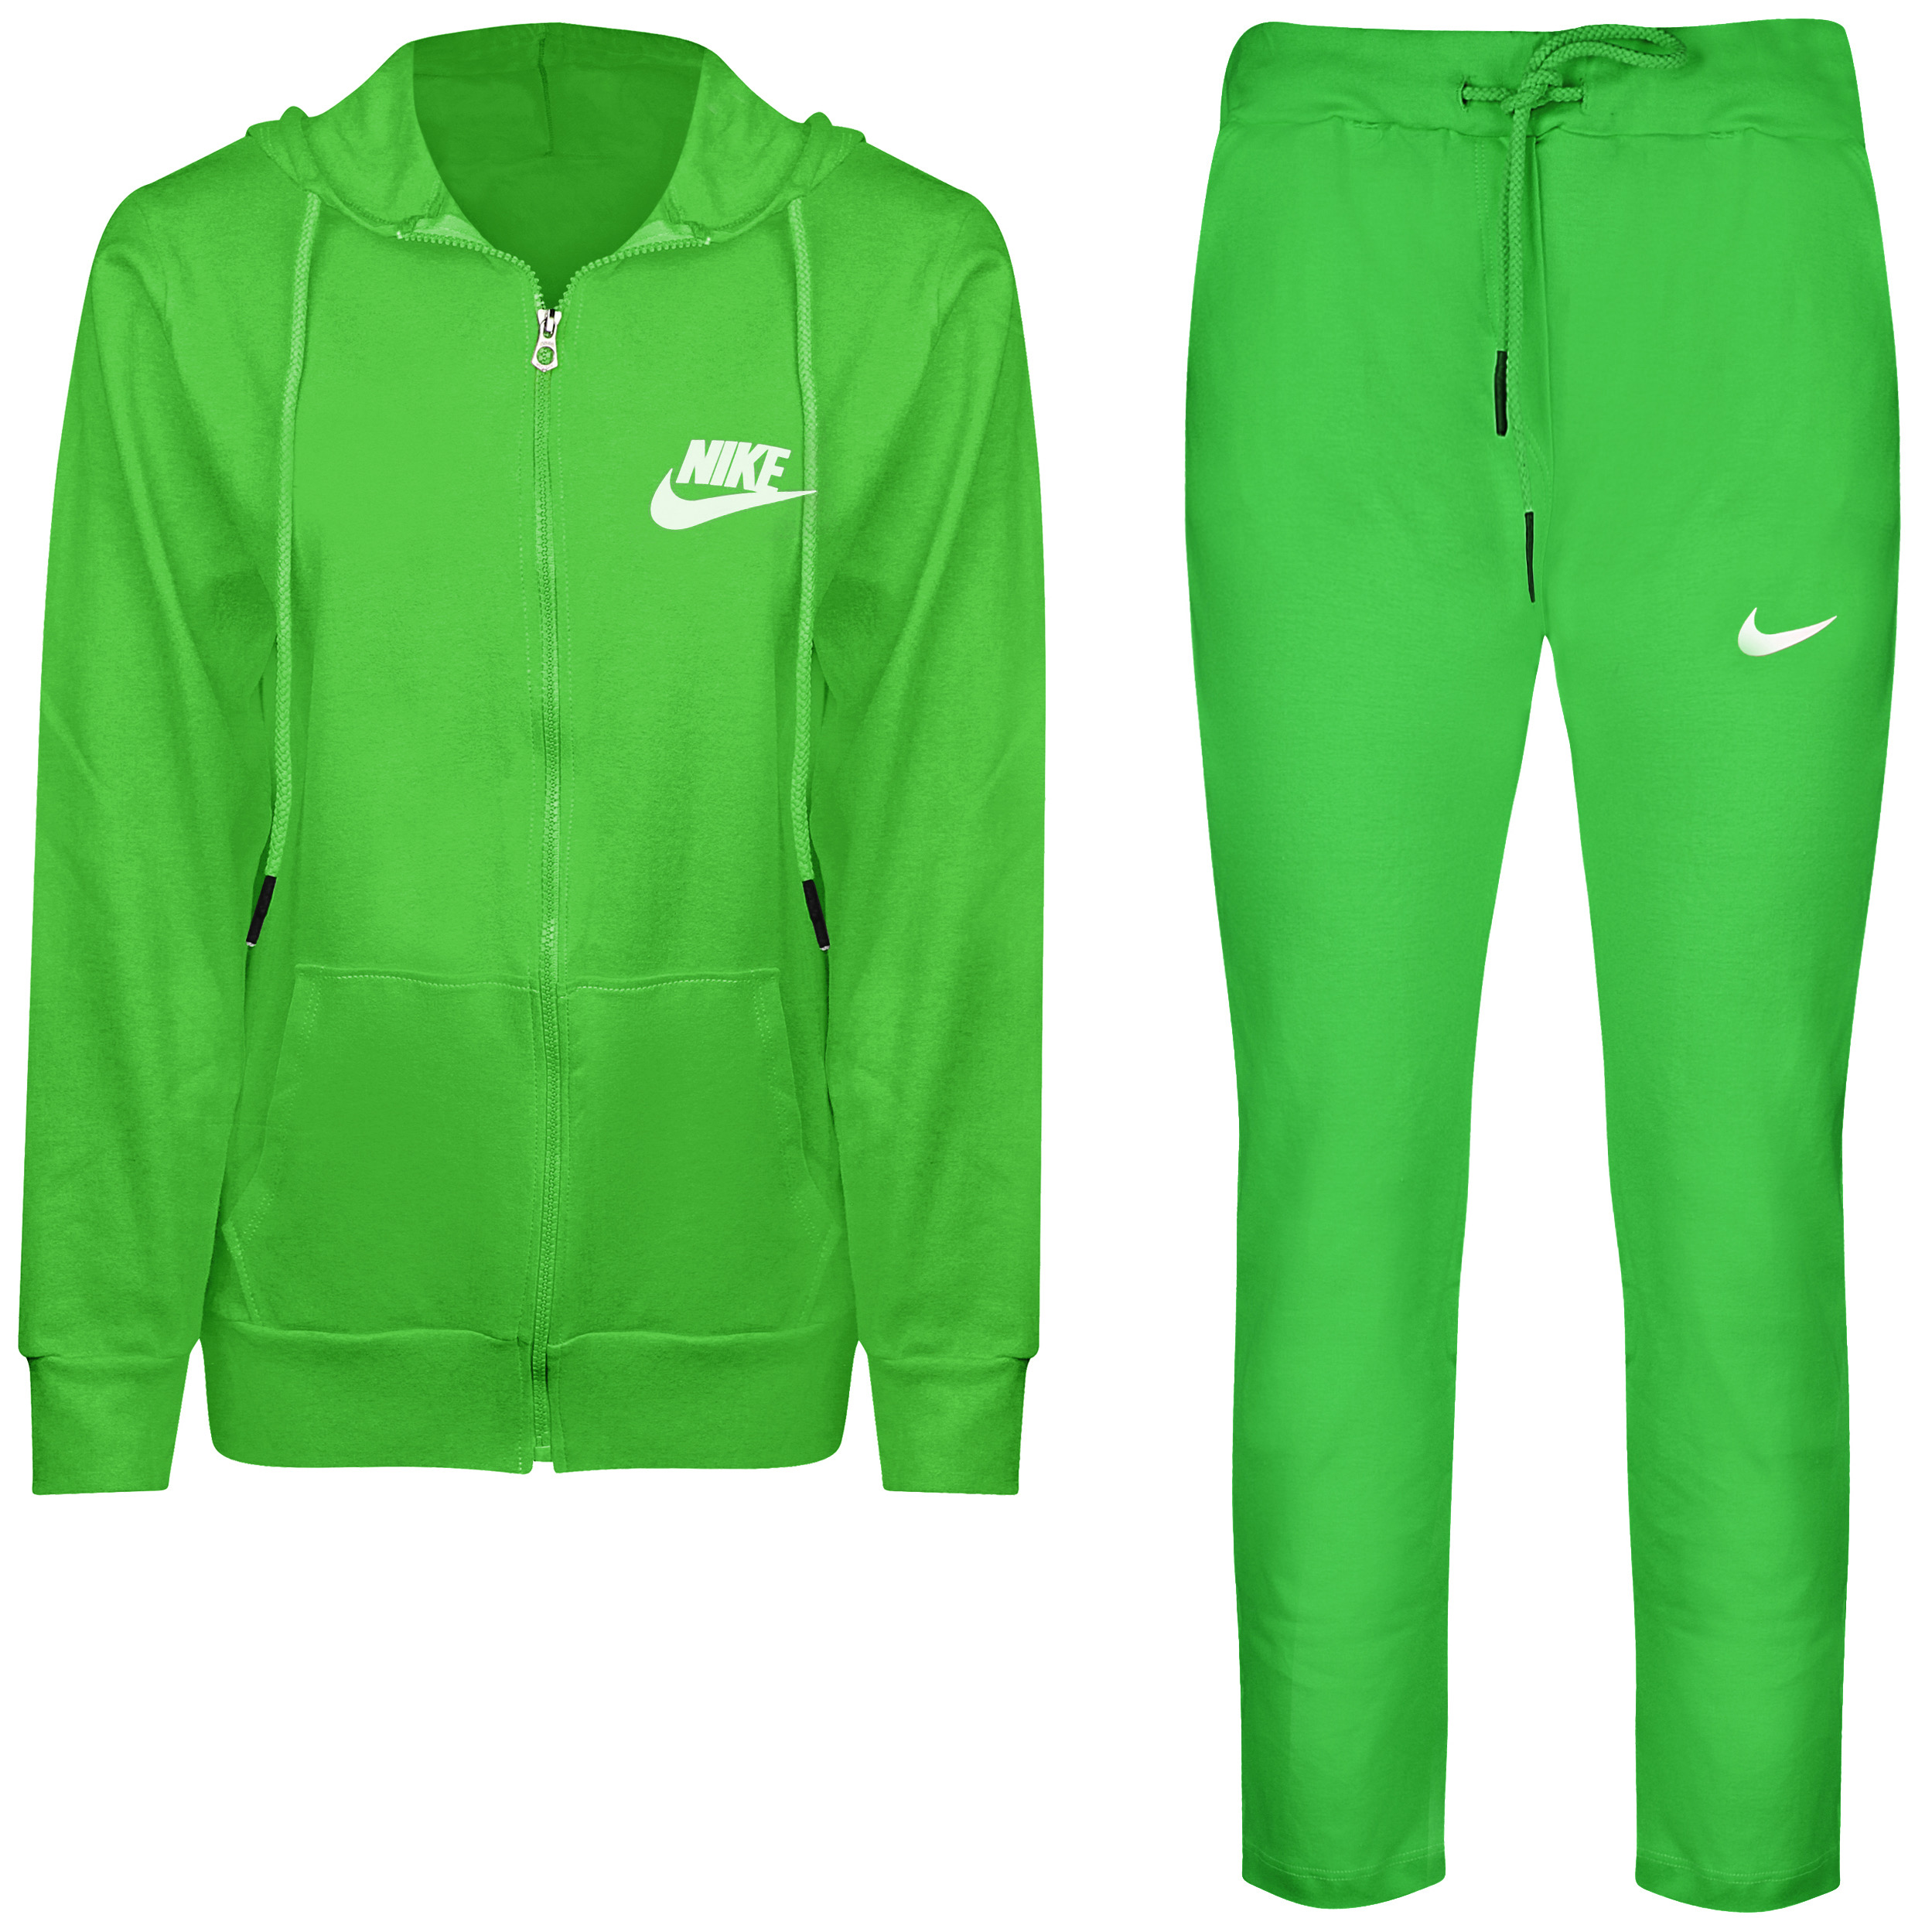 ست سویشرت و شلوار ورزشی زنانه کد MN20 رنگ سبز